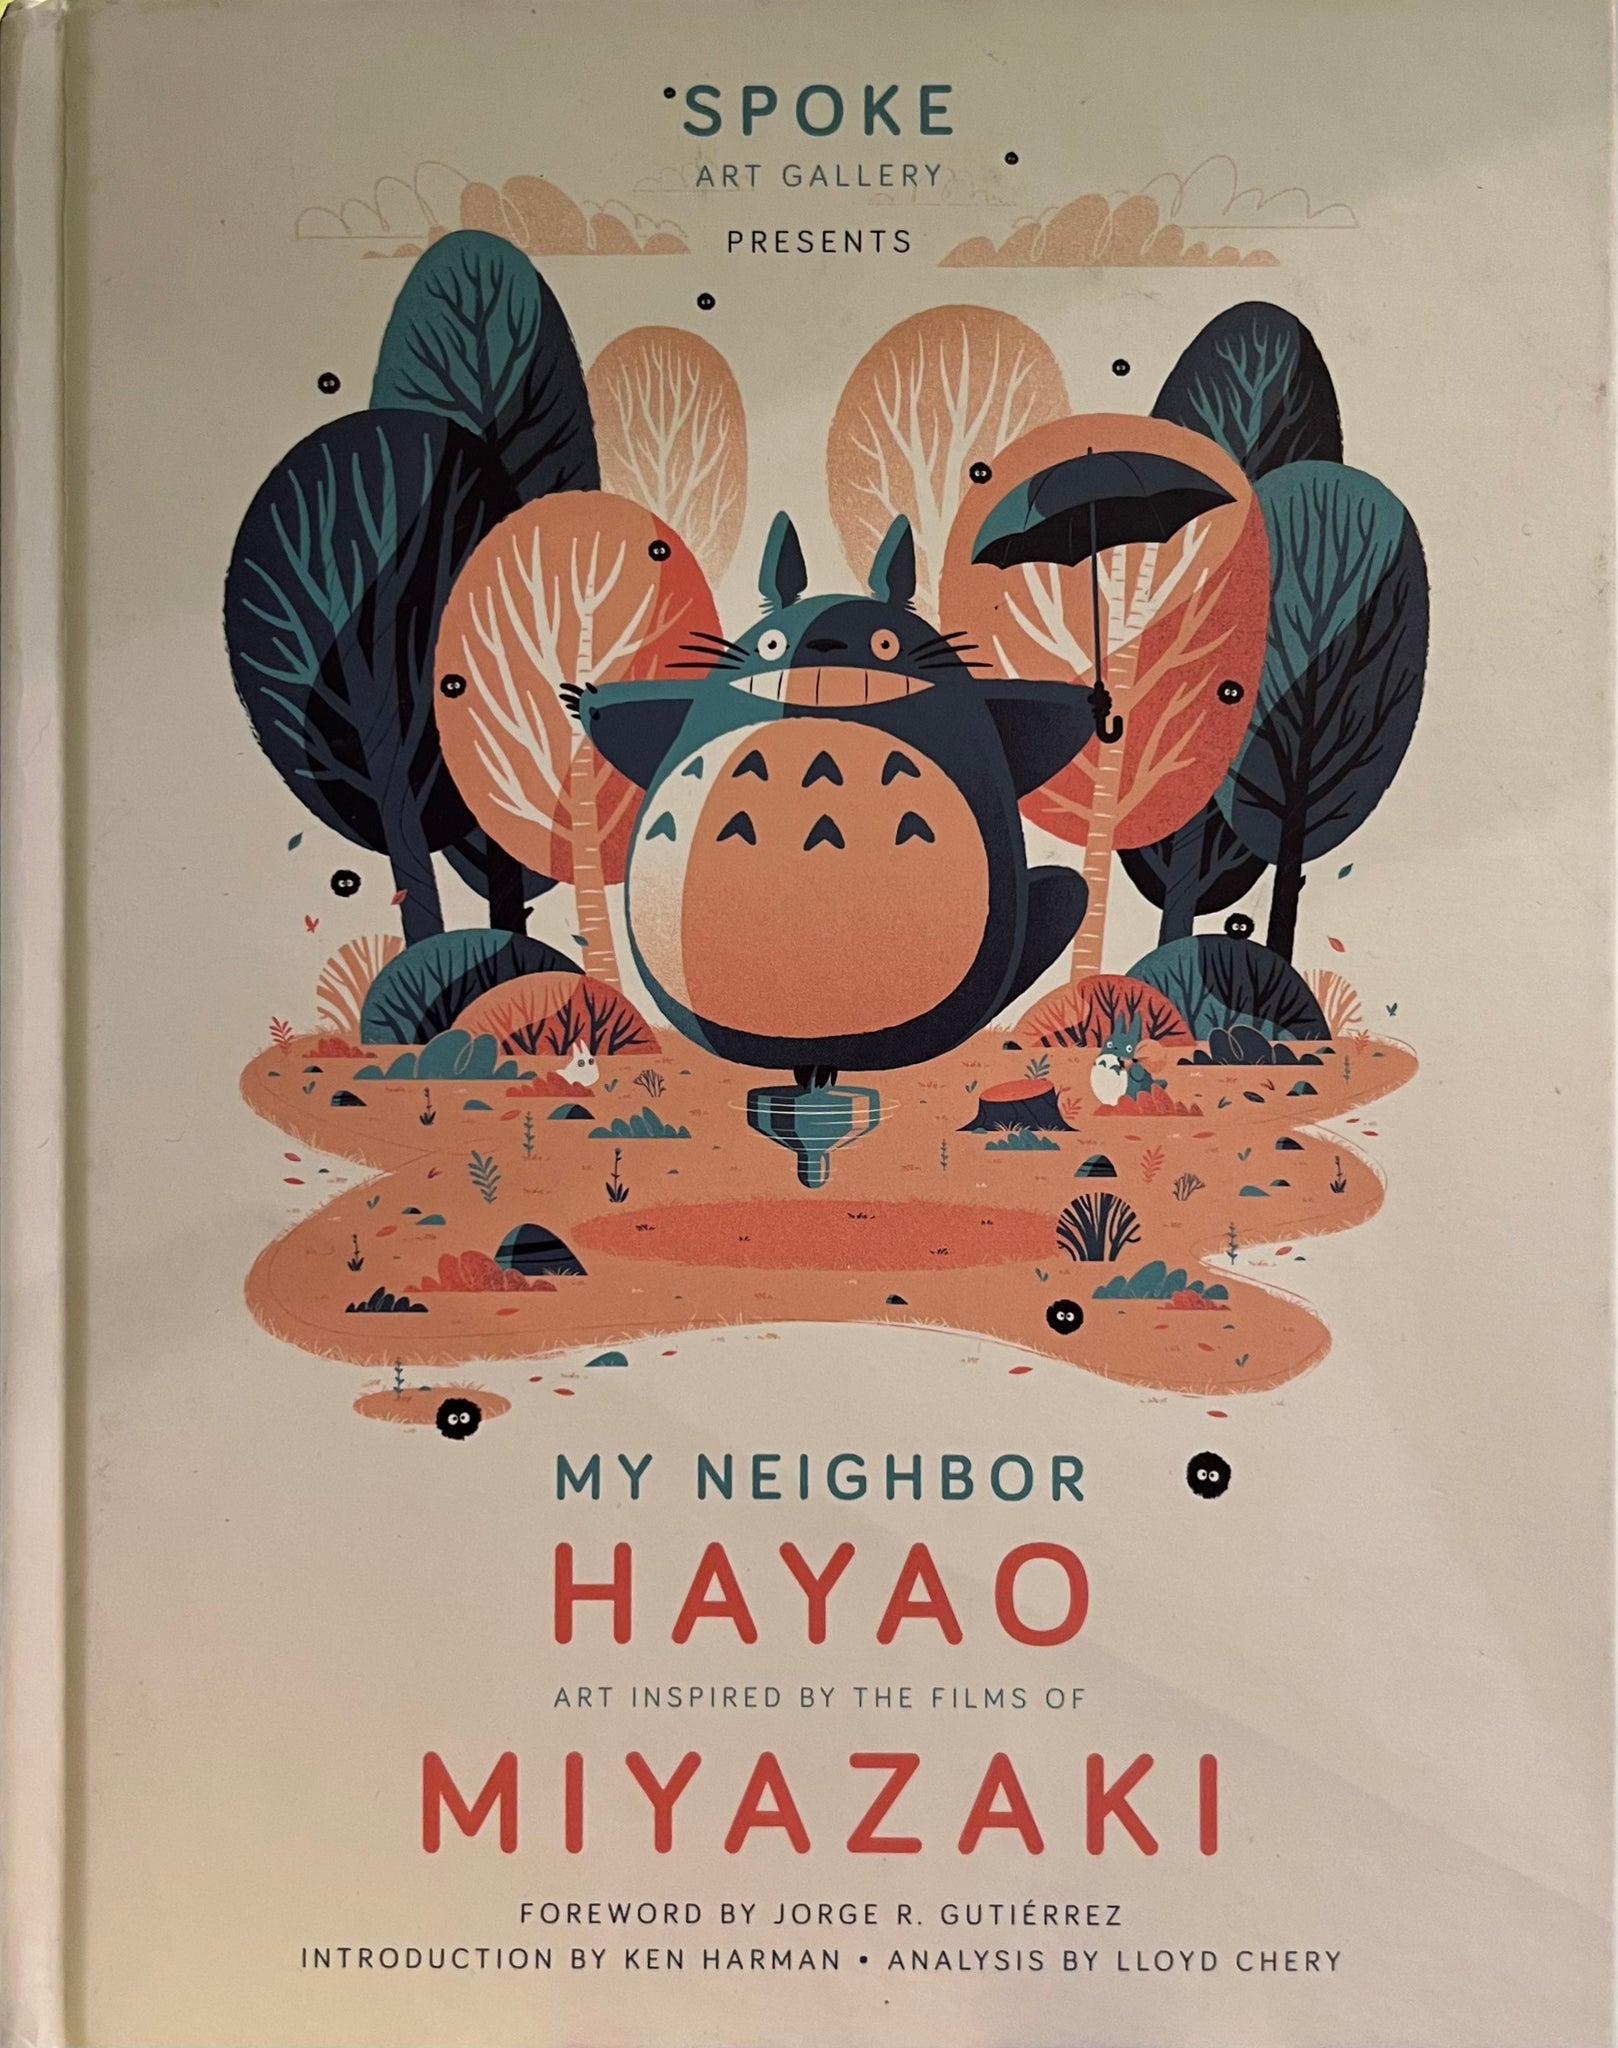 My Neighbor Hayao, Art Inspired by the Films of Miyazaki, Spoke Art Gallery